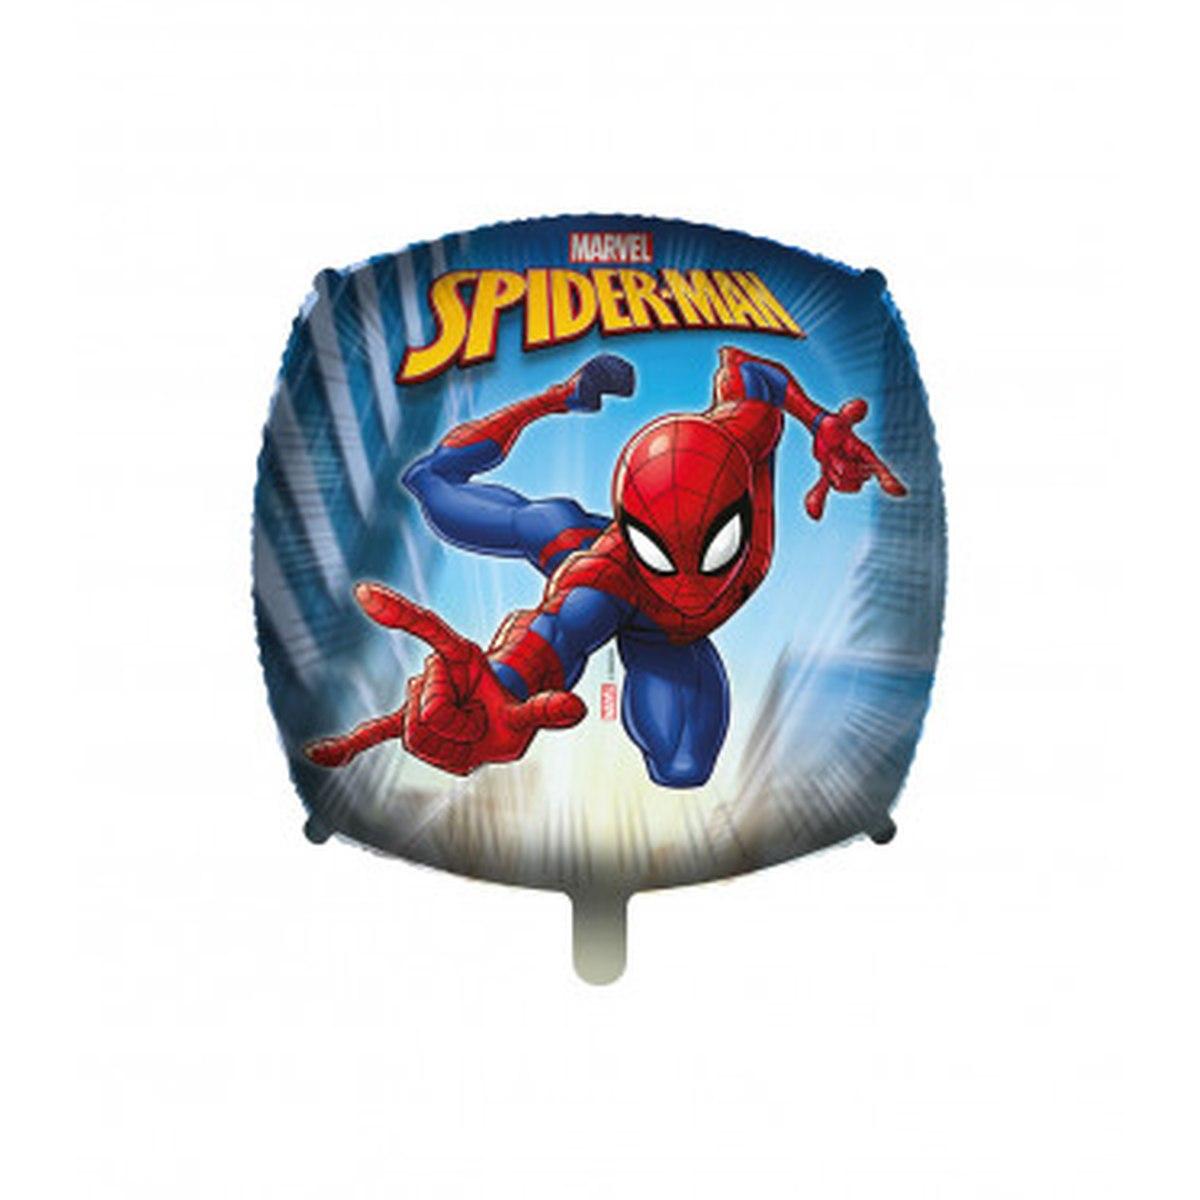 Spiderman crime fighter square ballong